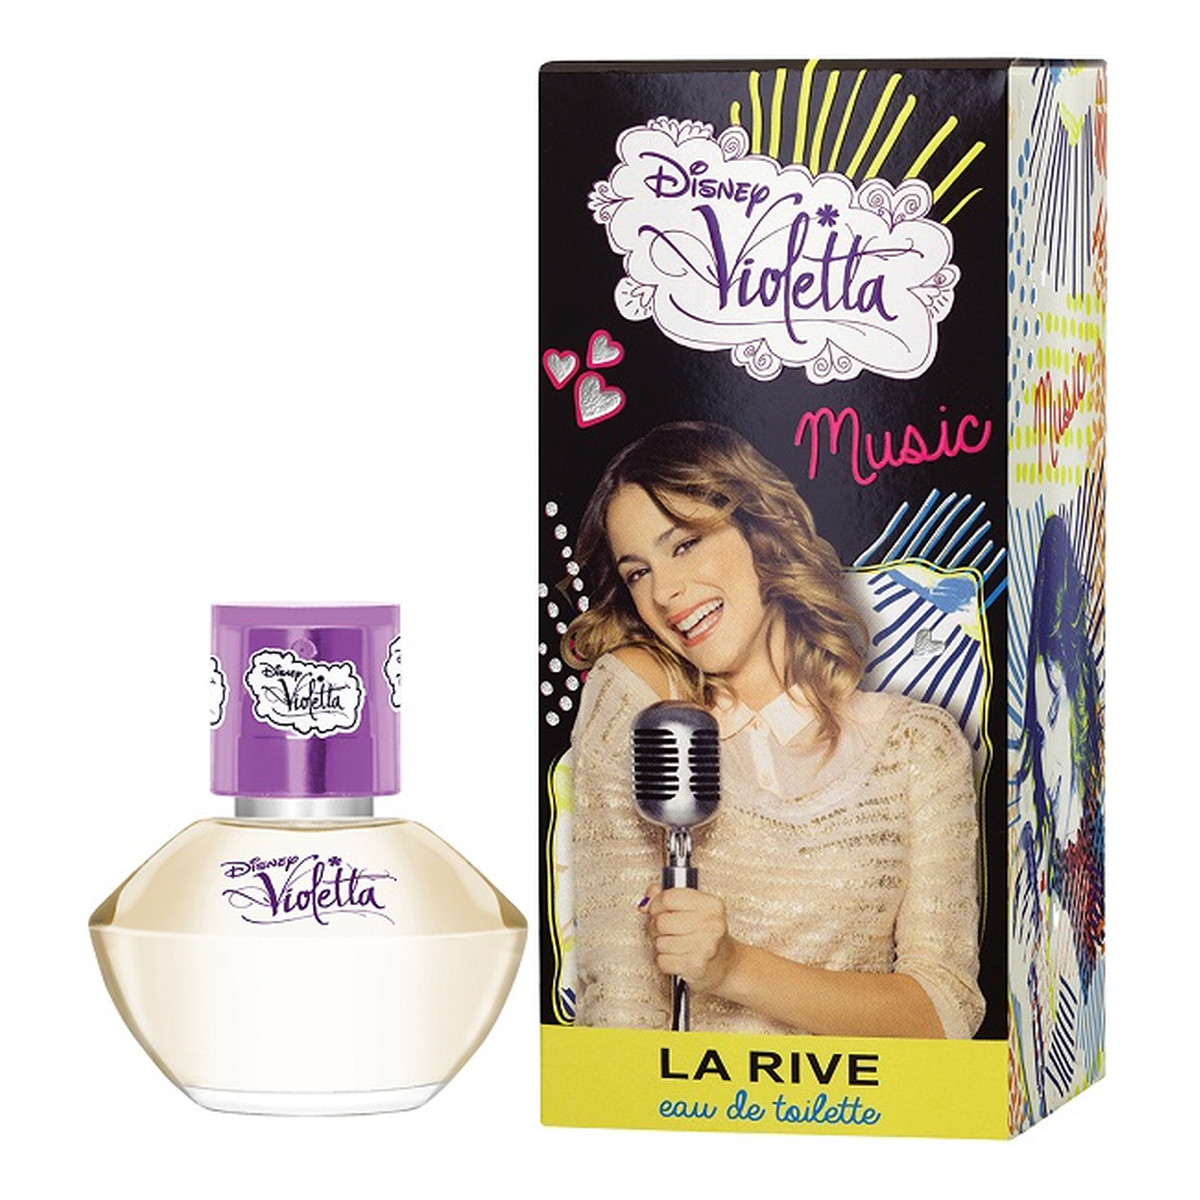 La Rive Disney Violetta Music woda toaletowa 20ml